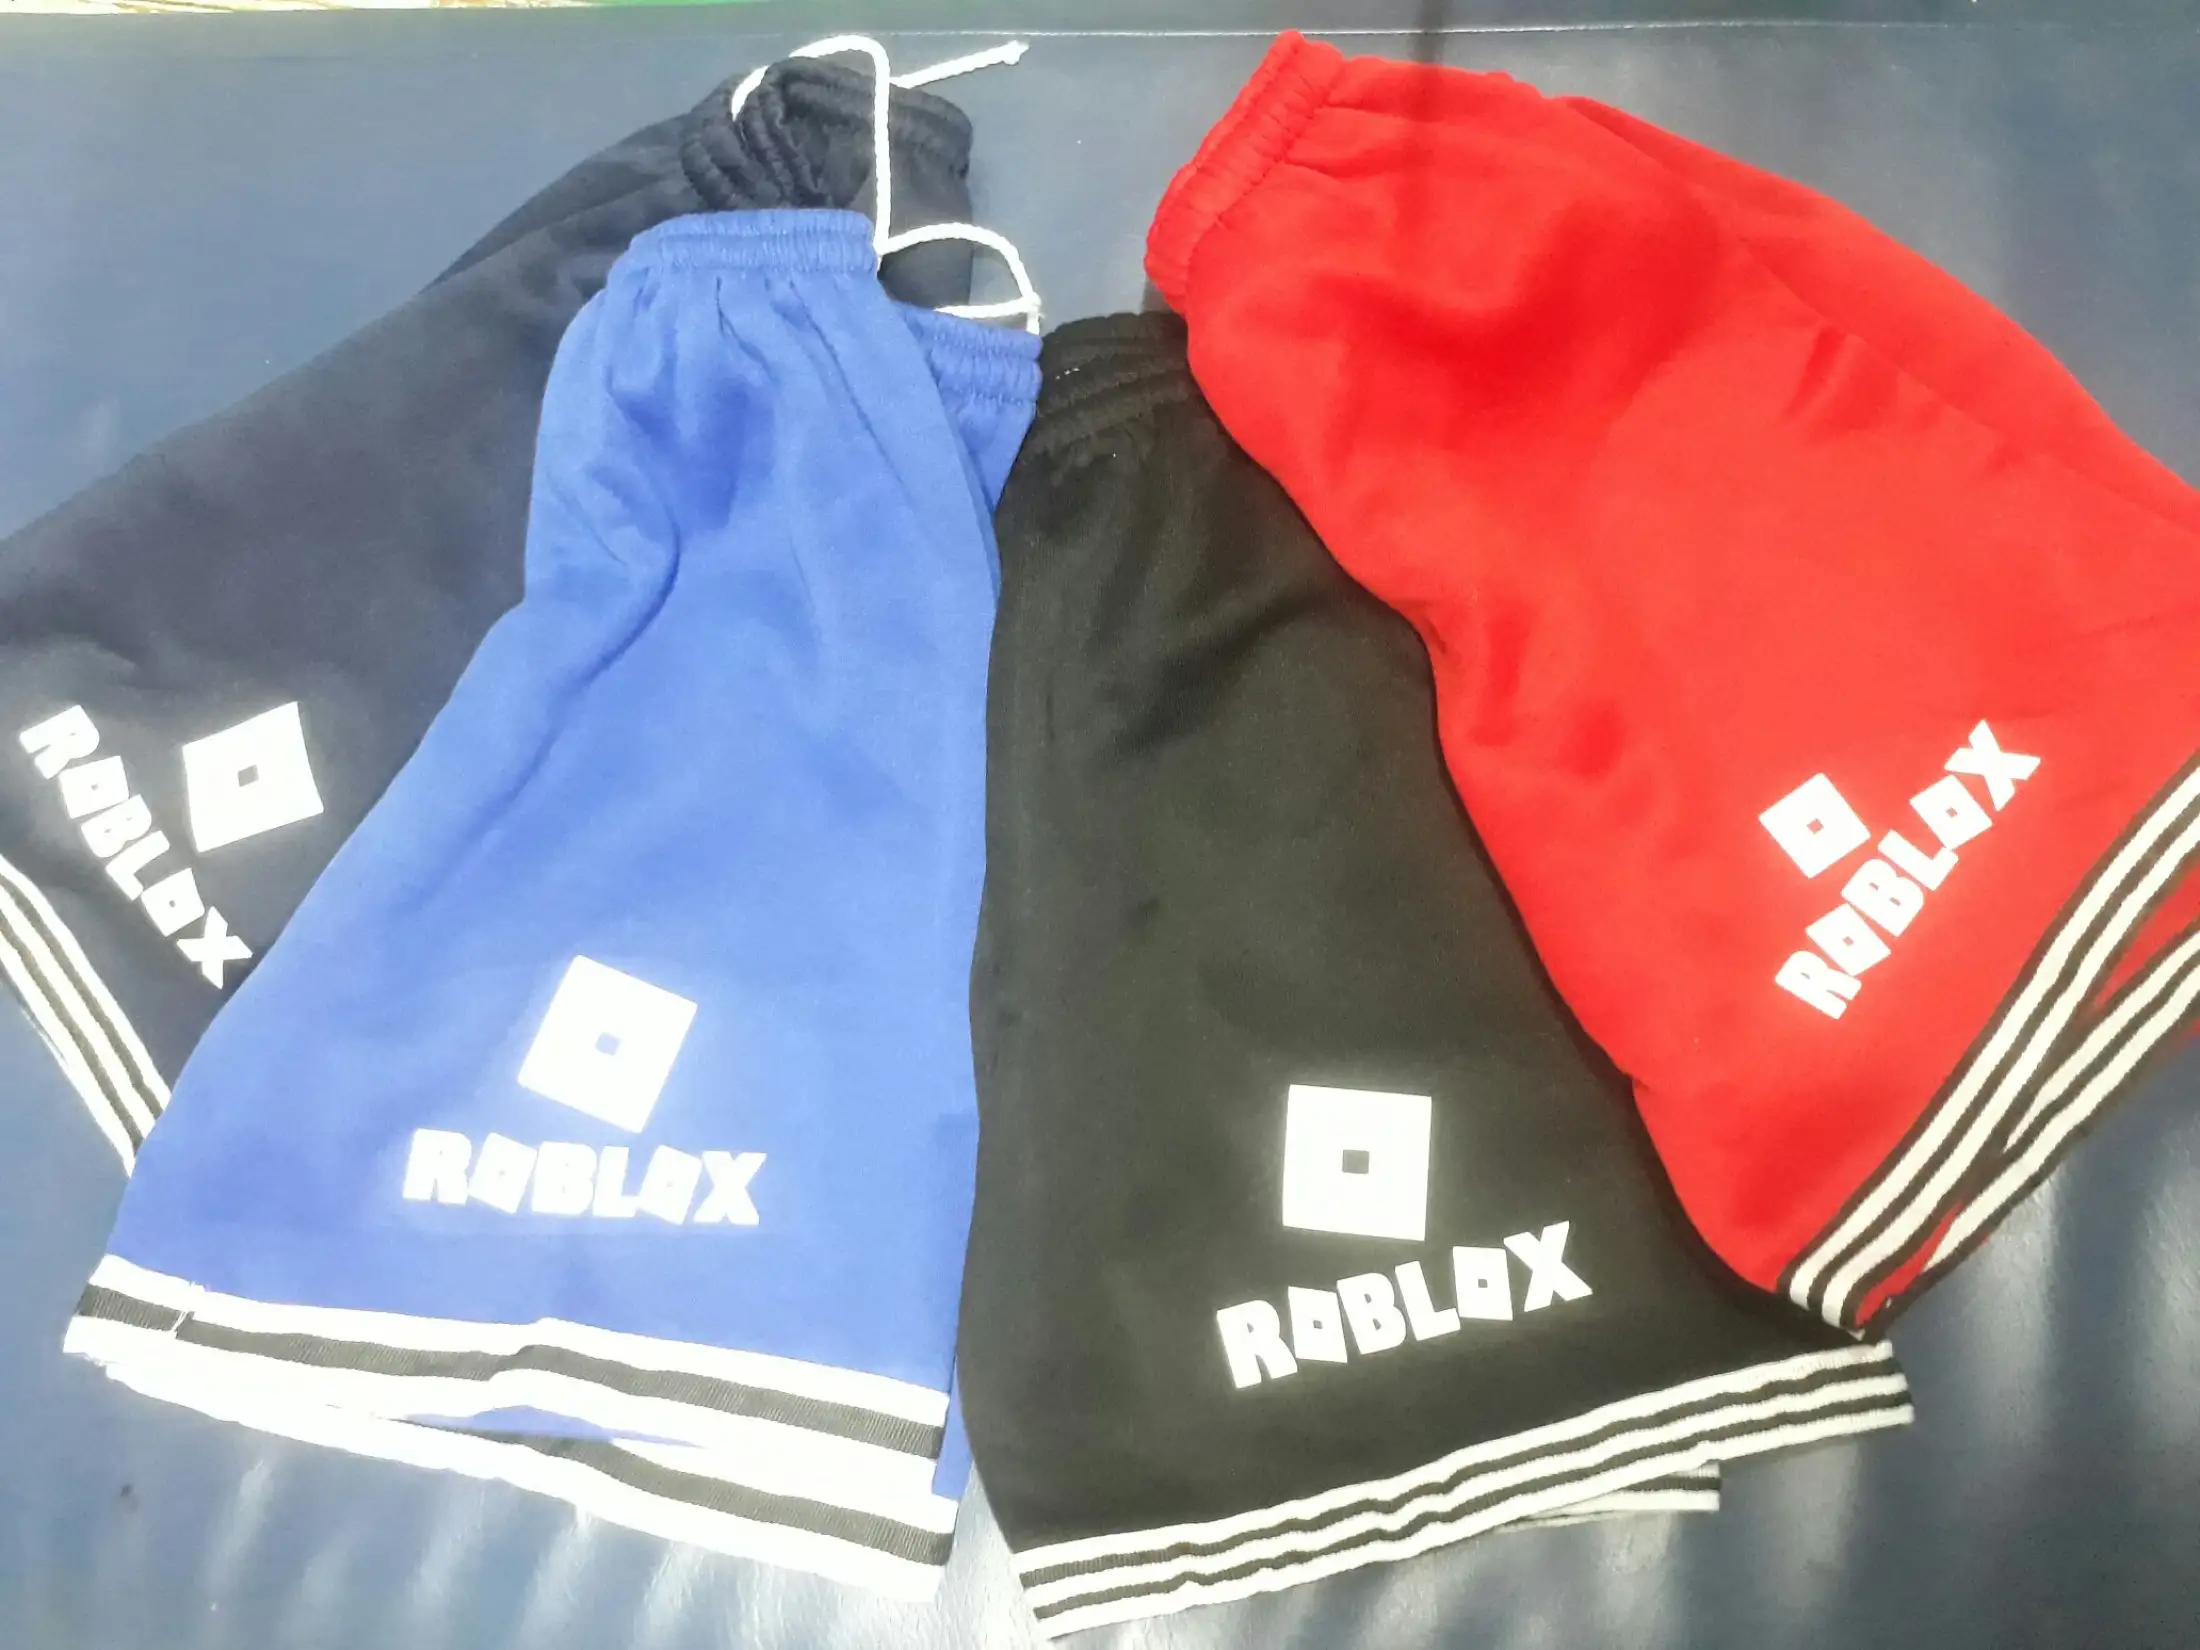 Roblox Kids Shorts 5 To 8 Yrs Old Lazada Ph - red roblox shorts